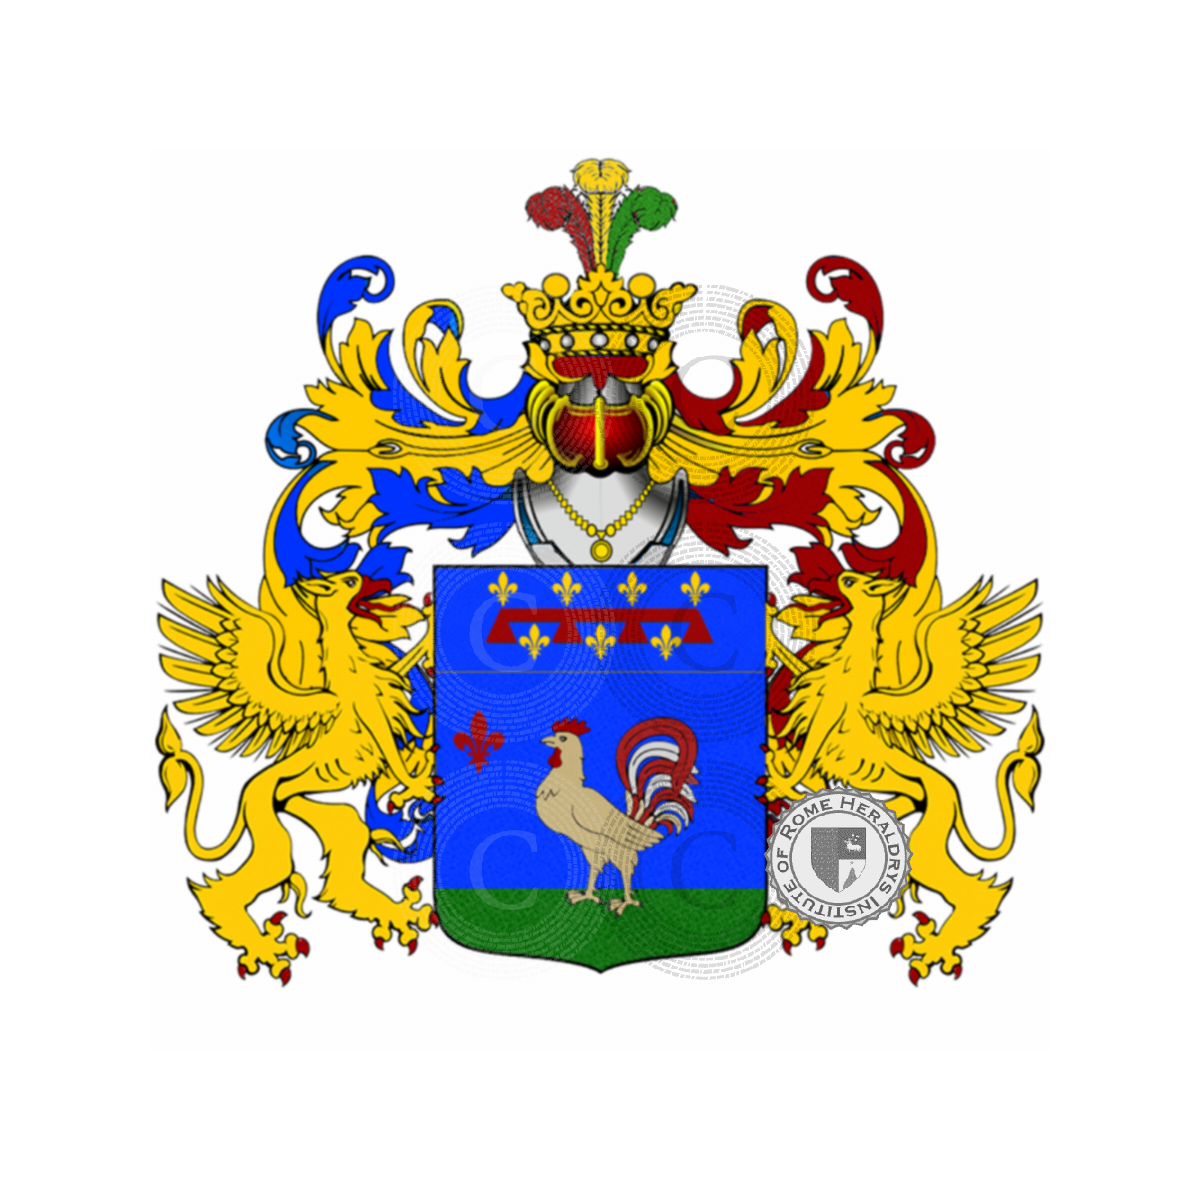 Coat of arms of familyGalluzzi